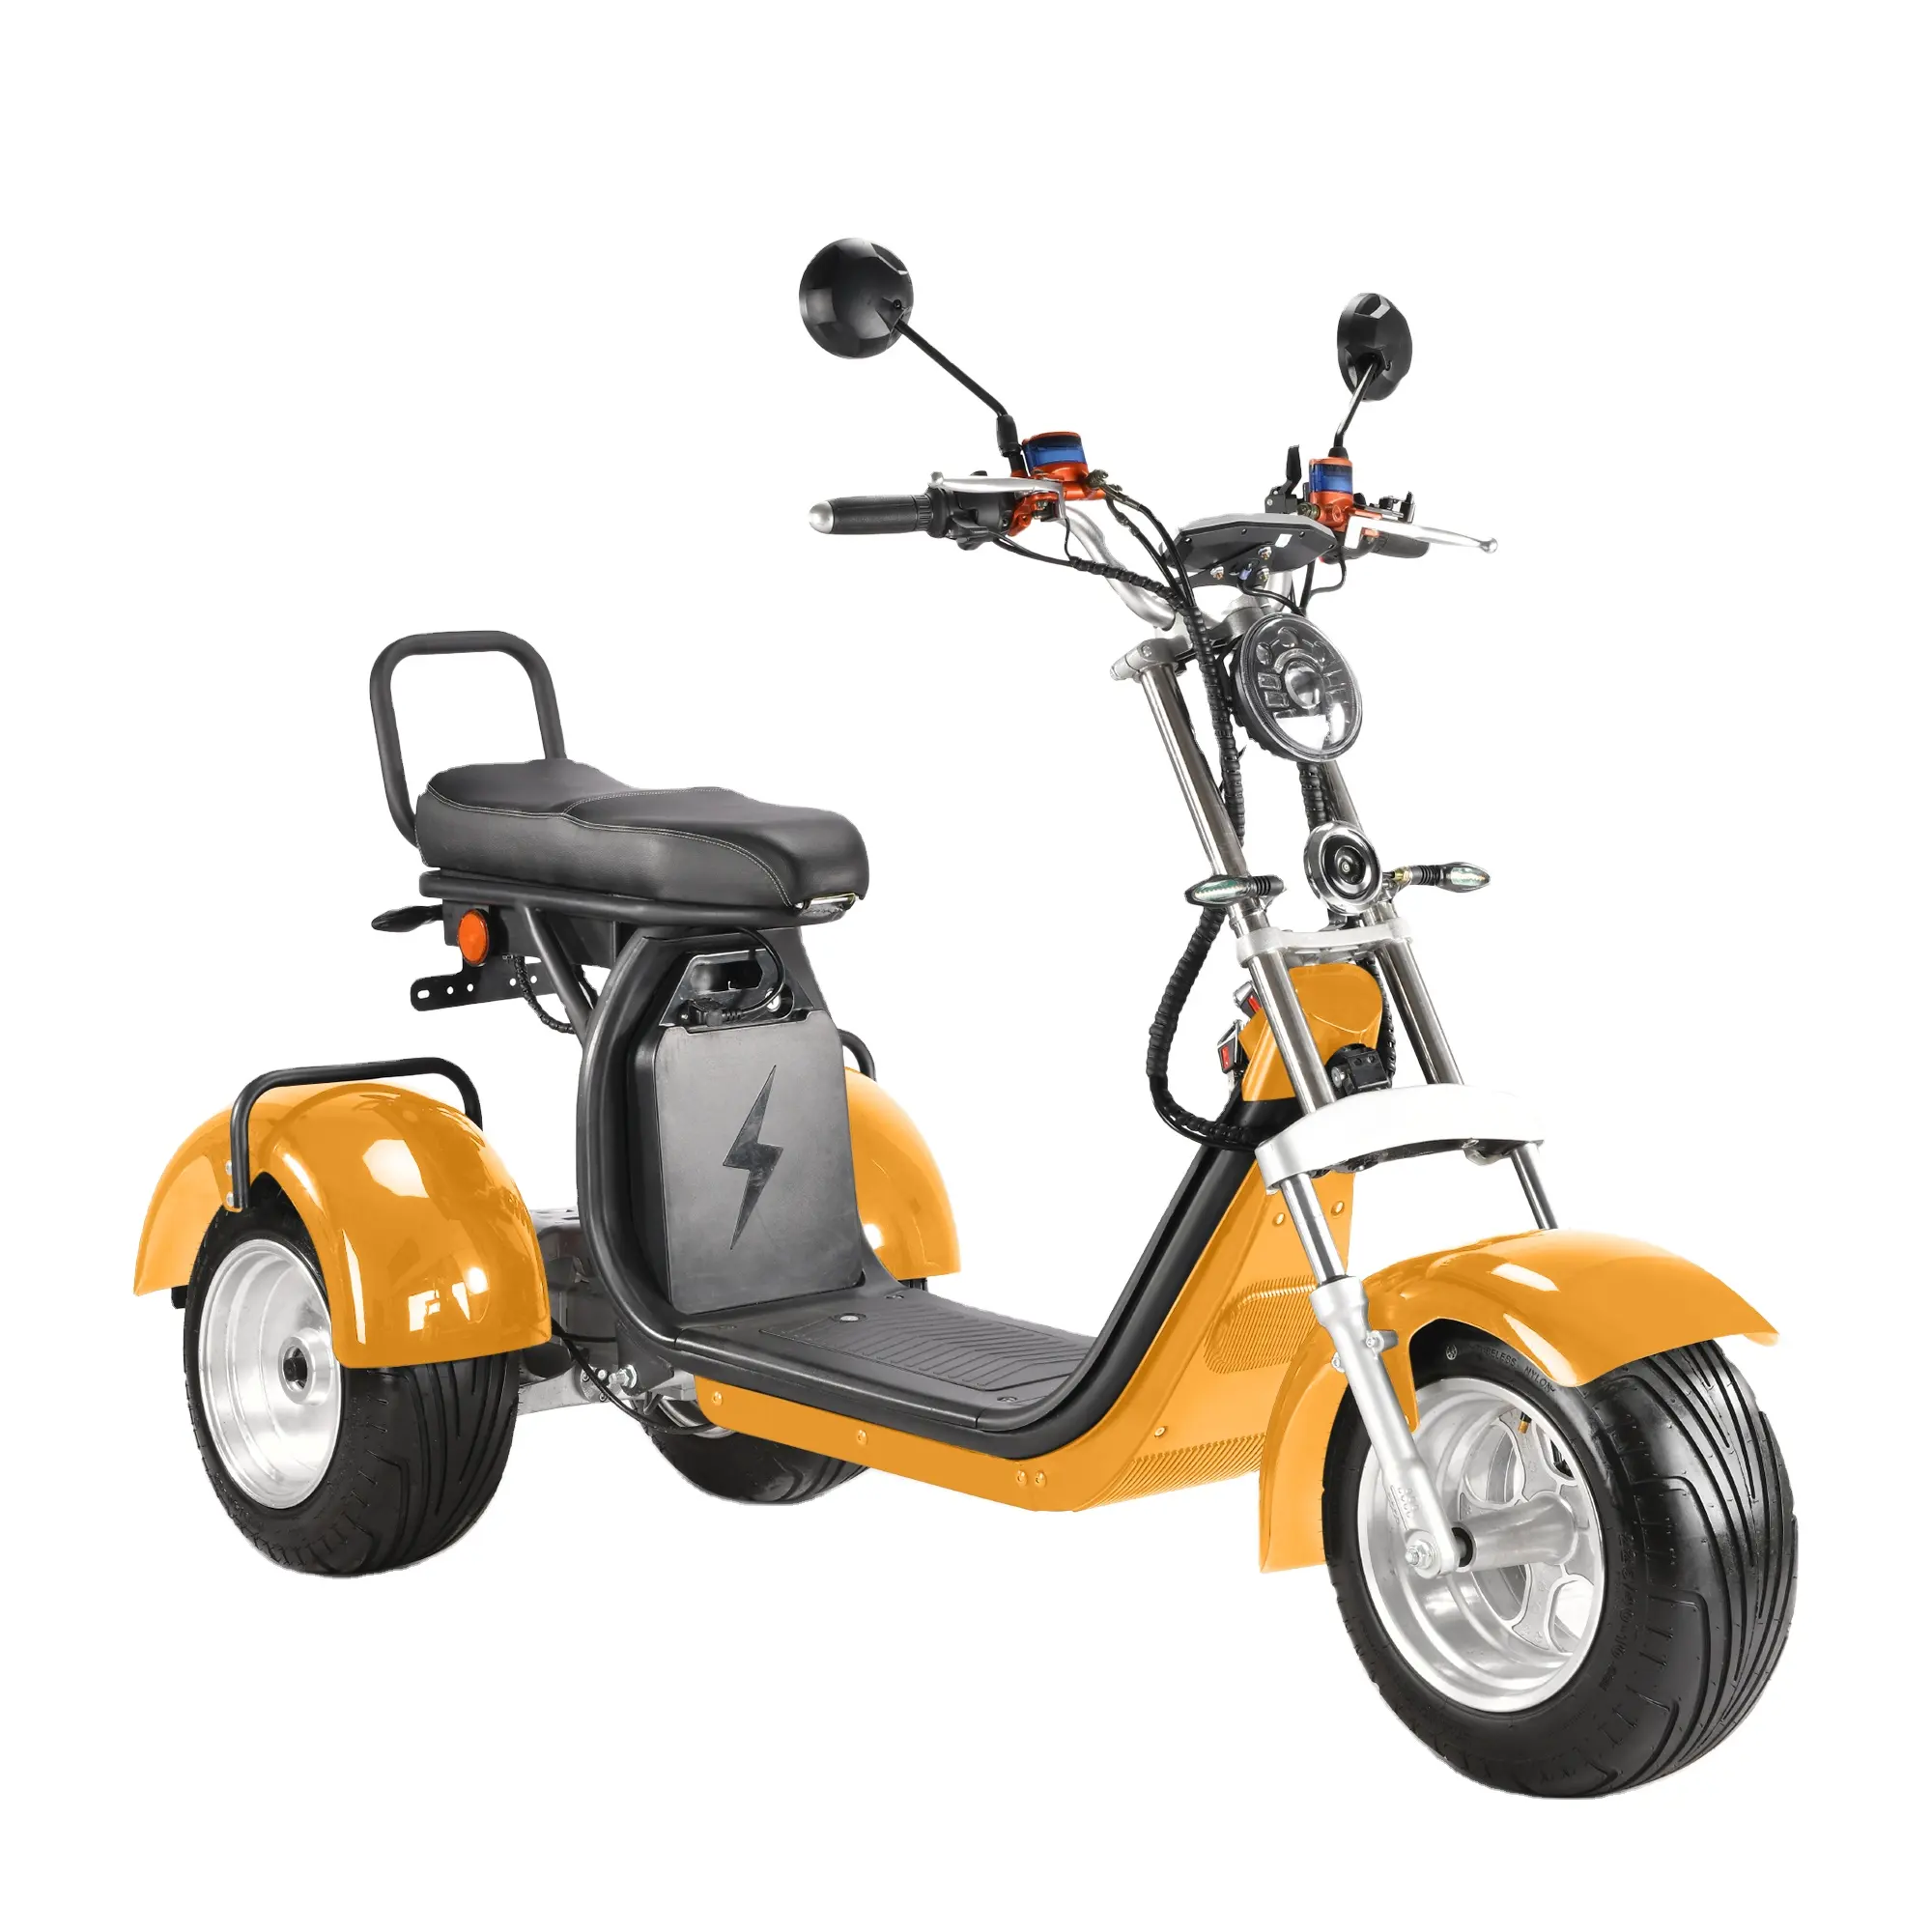 ईईसी/coc प्रमाणित और विदेशी गोदाम 3 पहिया citycoco इलेक्ट्रिक स्कूटर 4000W 20AH के साथ वयस्क बिजली tricycle बैटरी